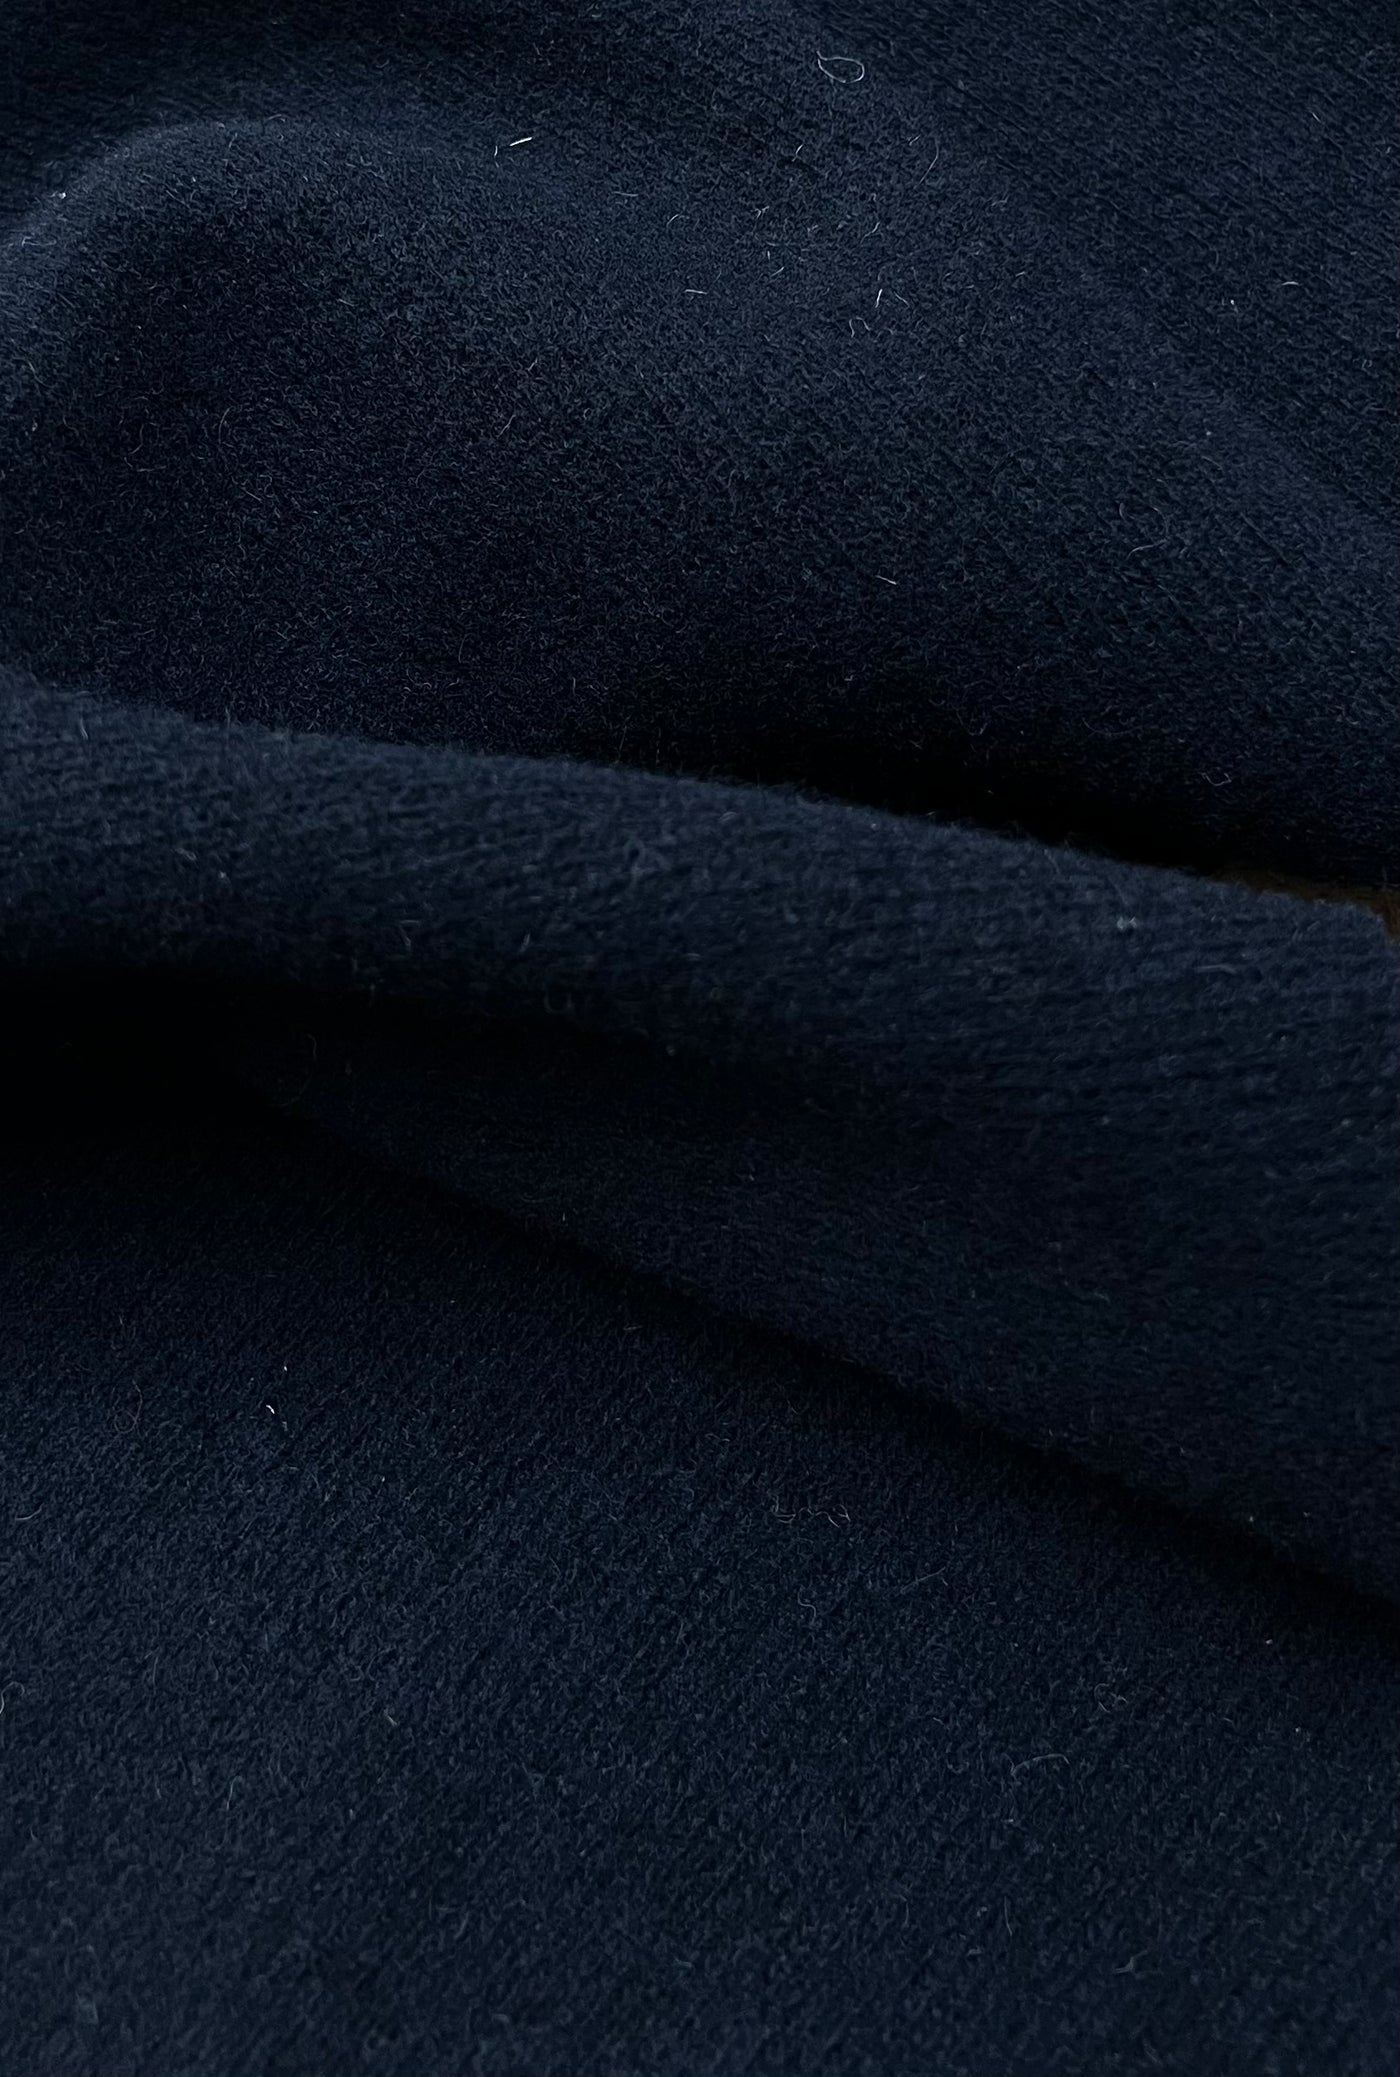 Wool Navy Plain Fabric